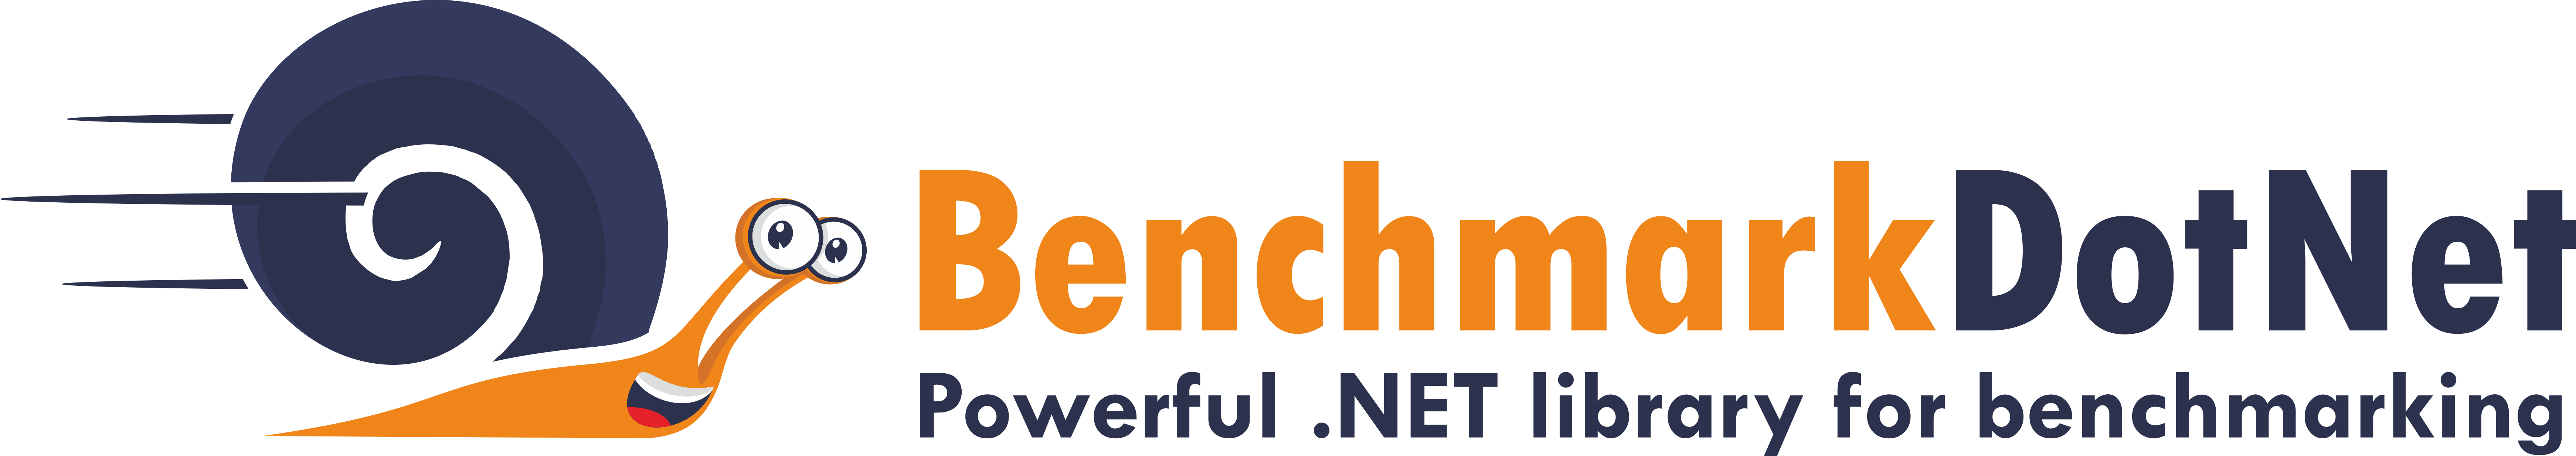 BenchmarkDotNet Logo